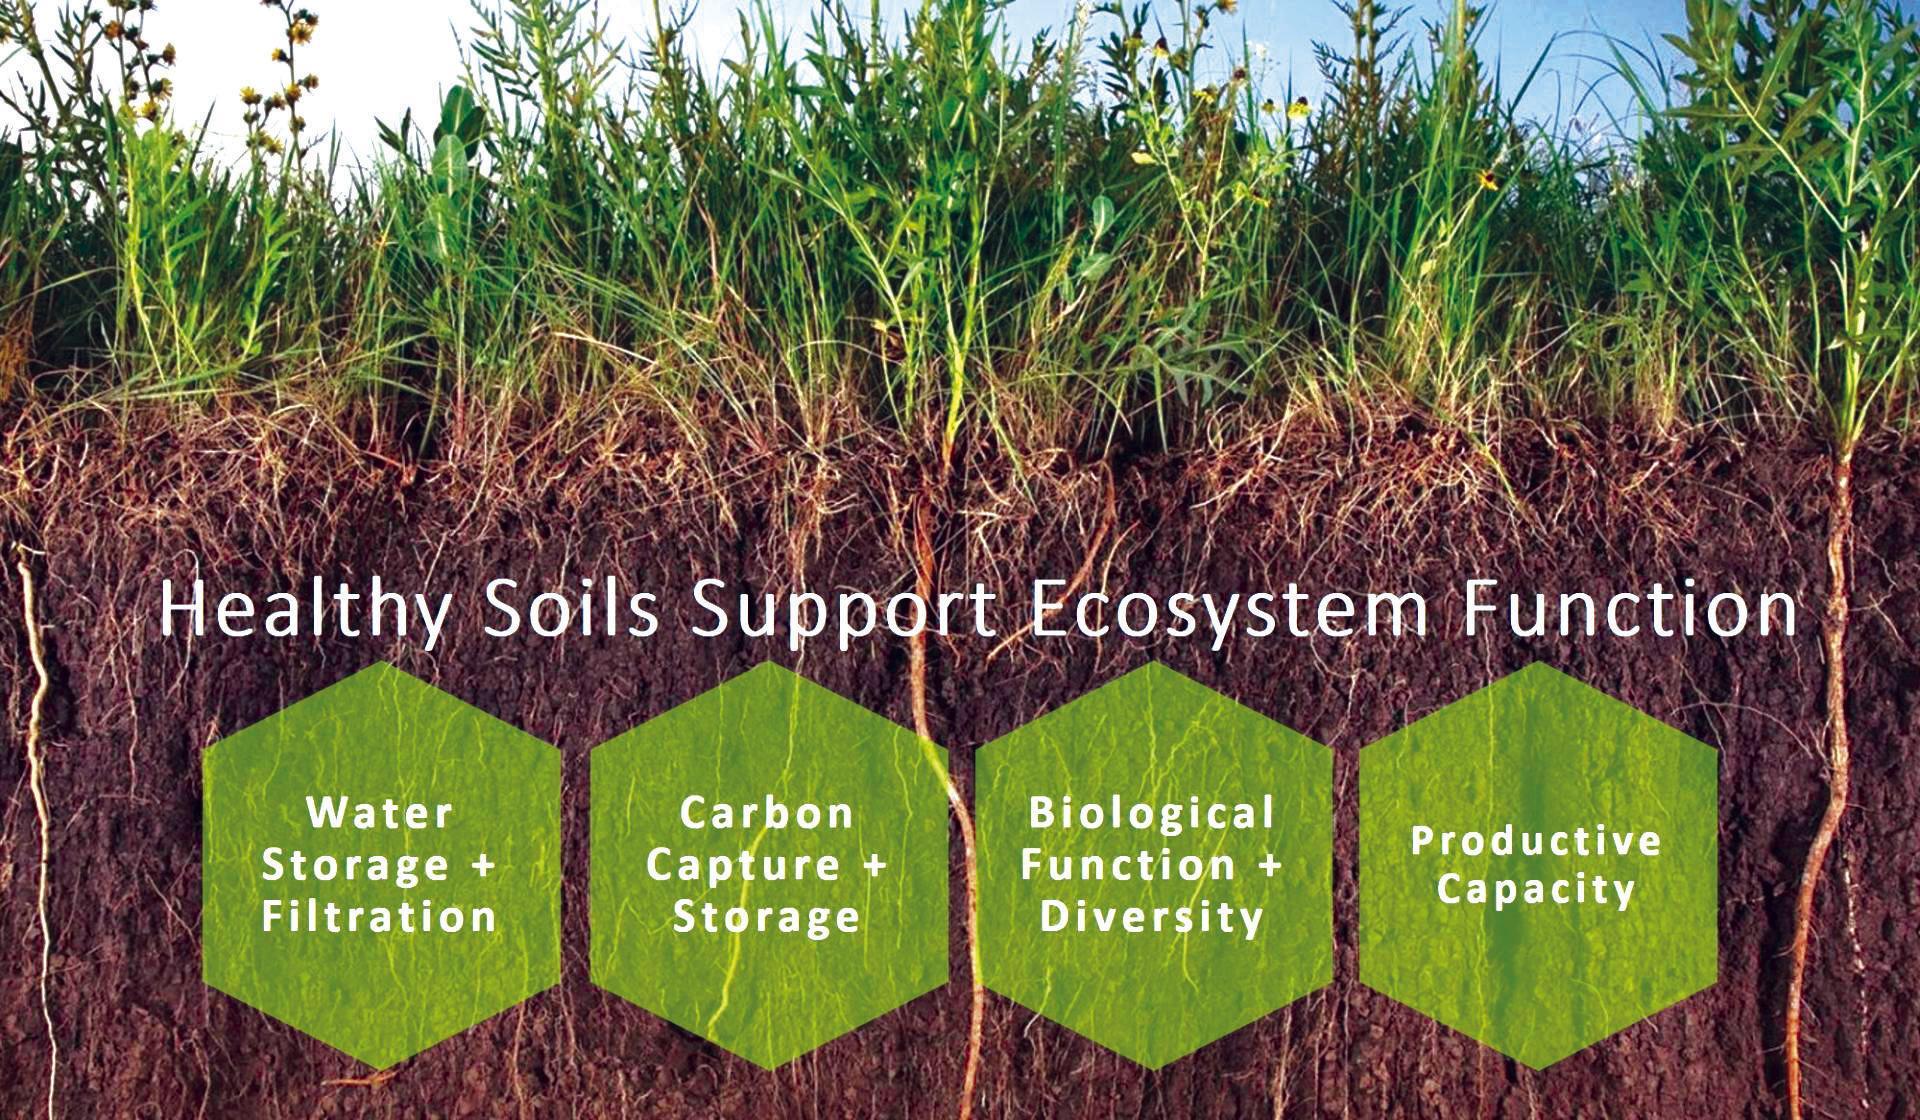 Building healthy soil